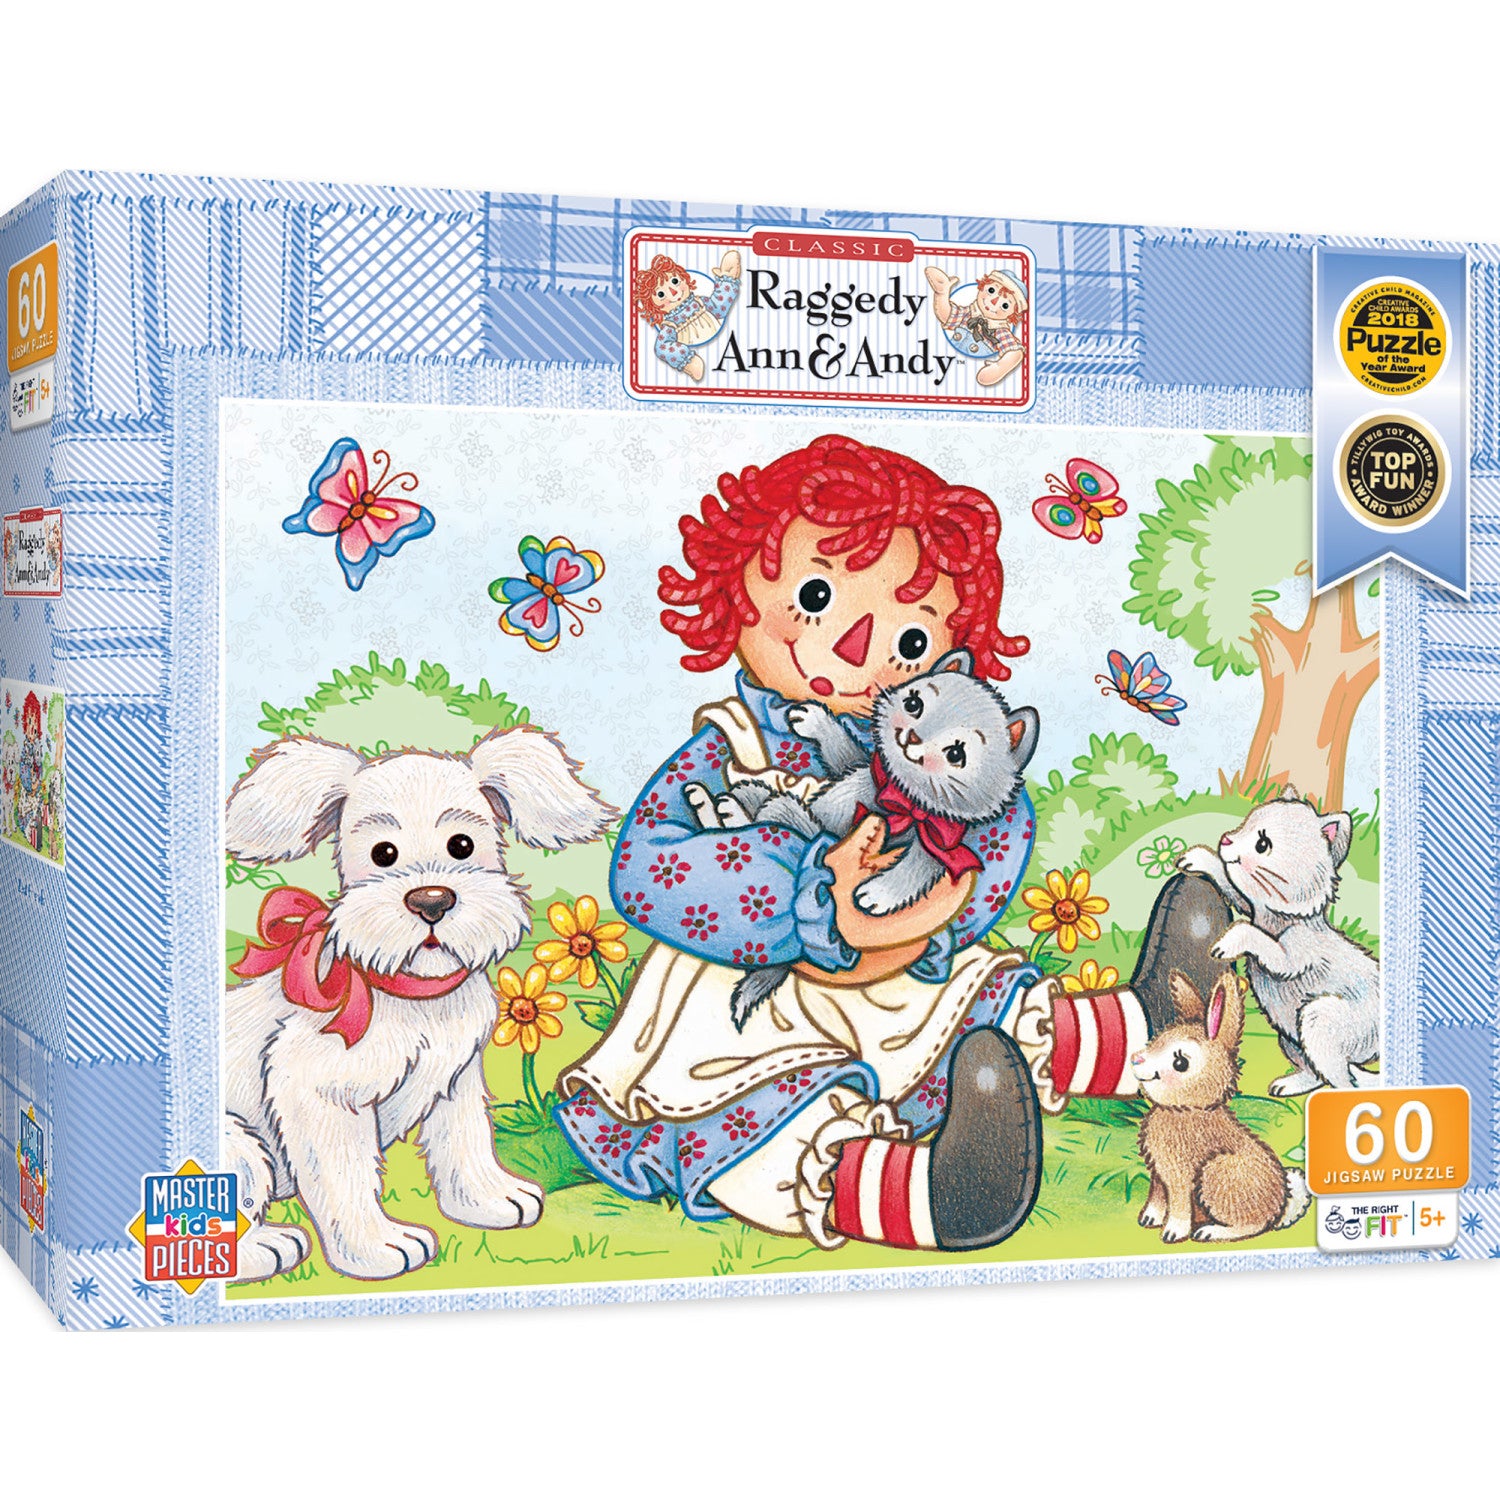 Raggedy Ann - Best Friends 60 Piece Jigsaw Puzzle